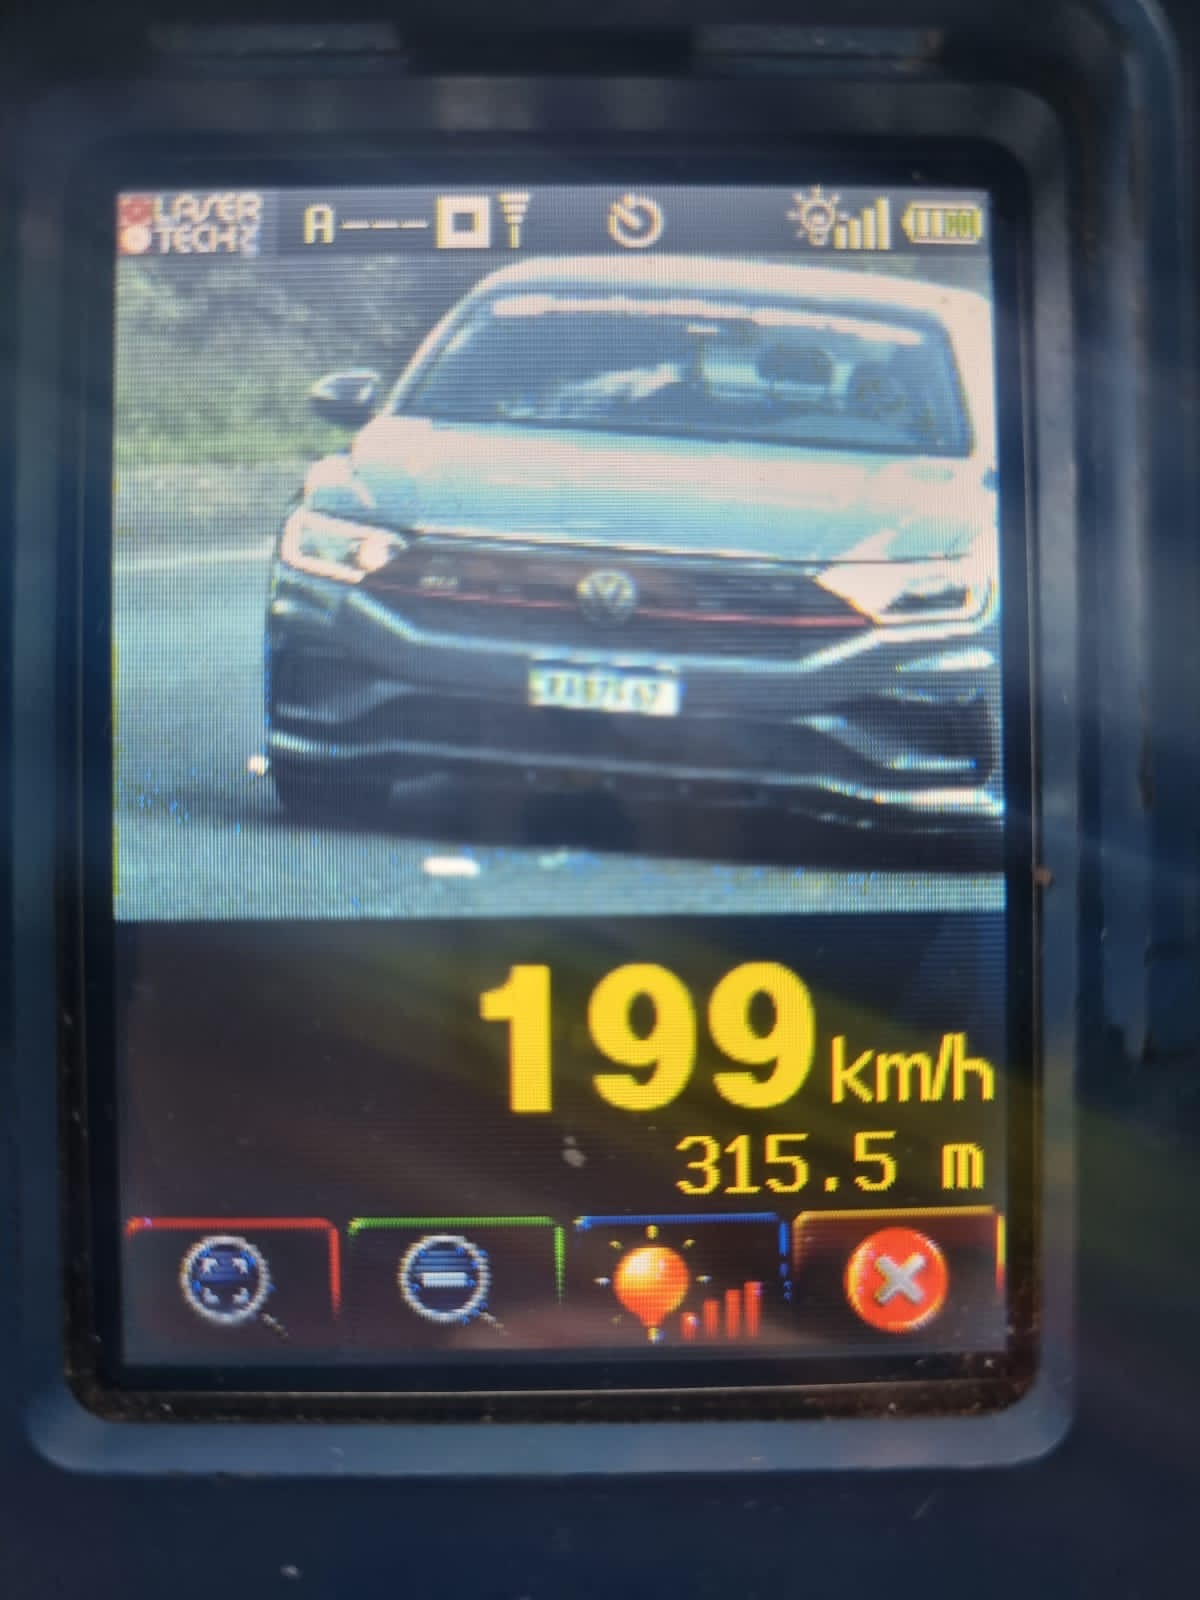 PRE aplica multa a veículo flagrado a 199 km/h em Carambeí